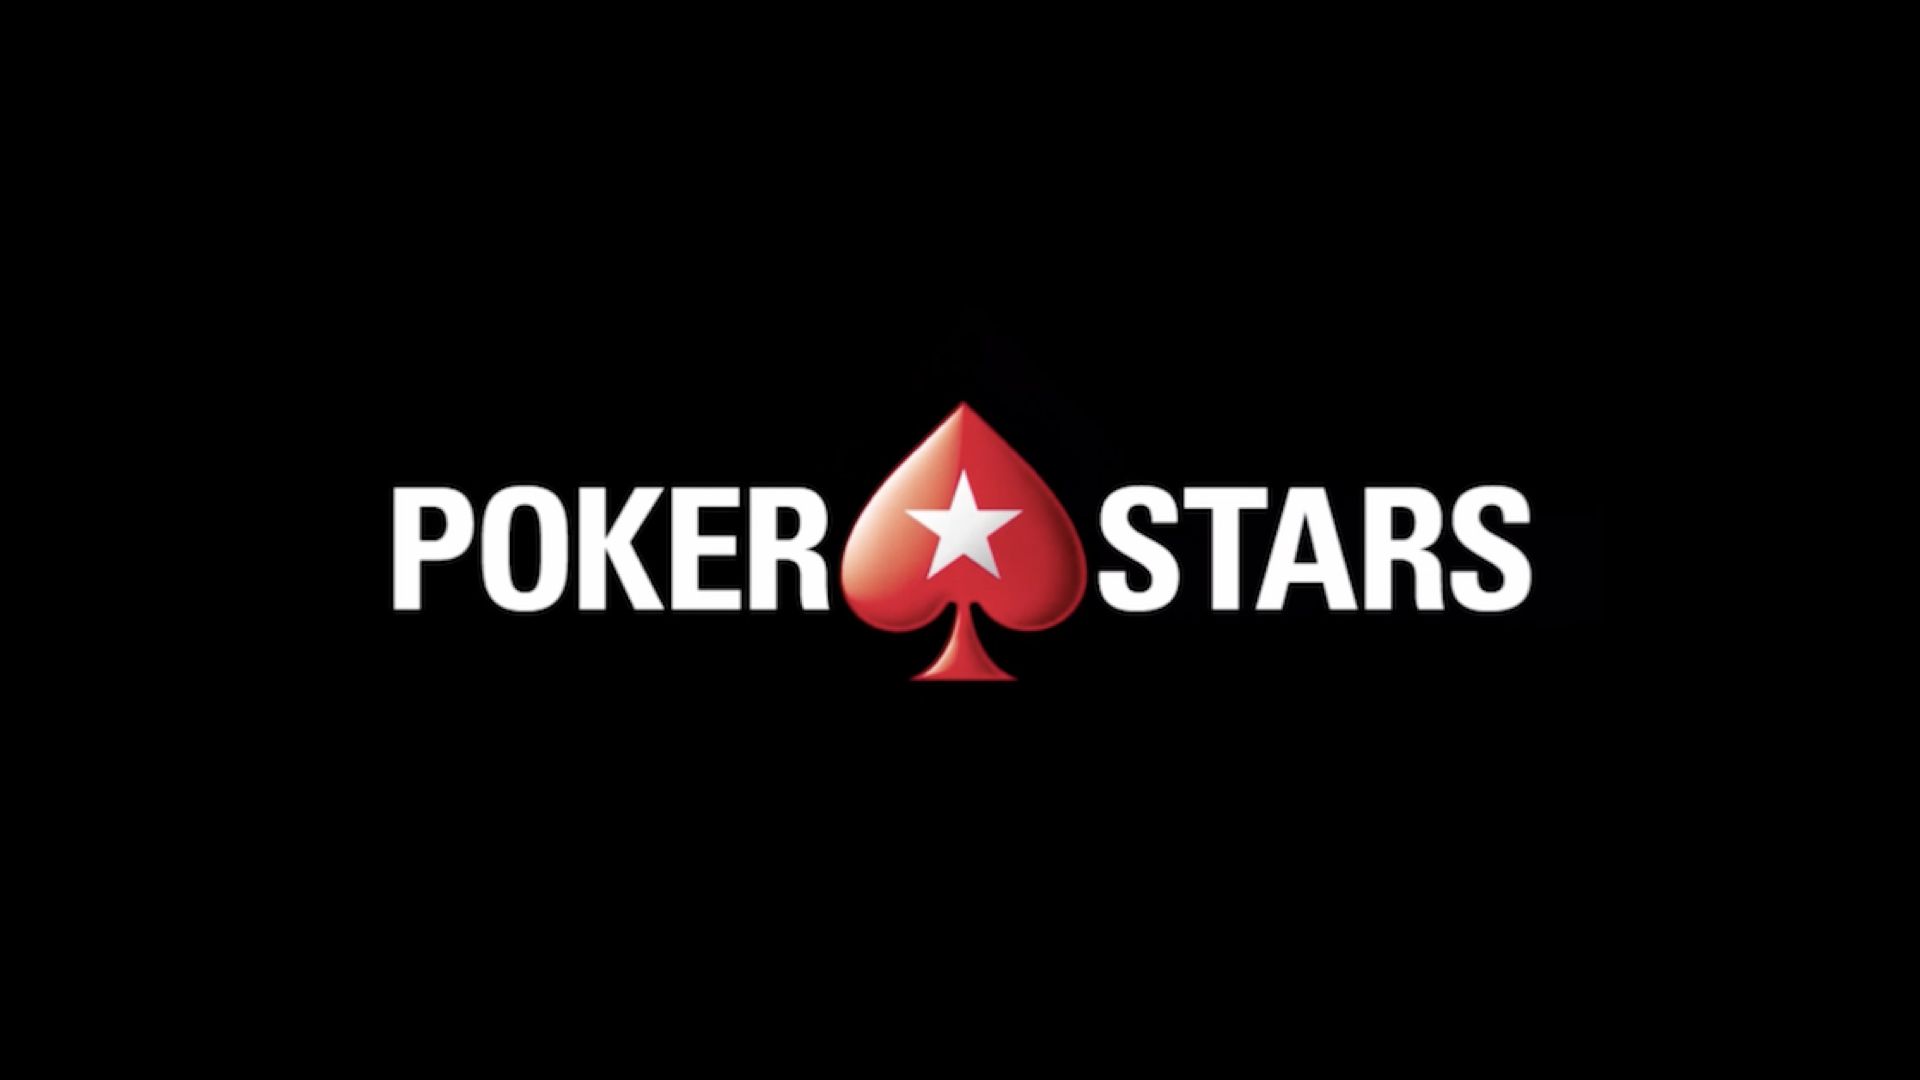 PokerStars Gaming instaling